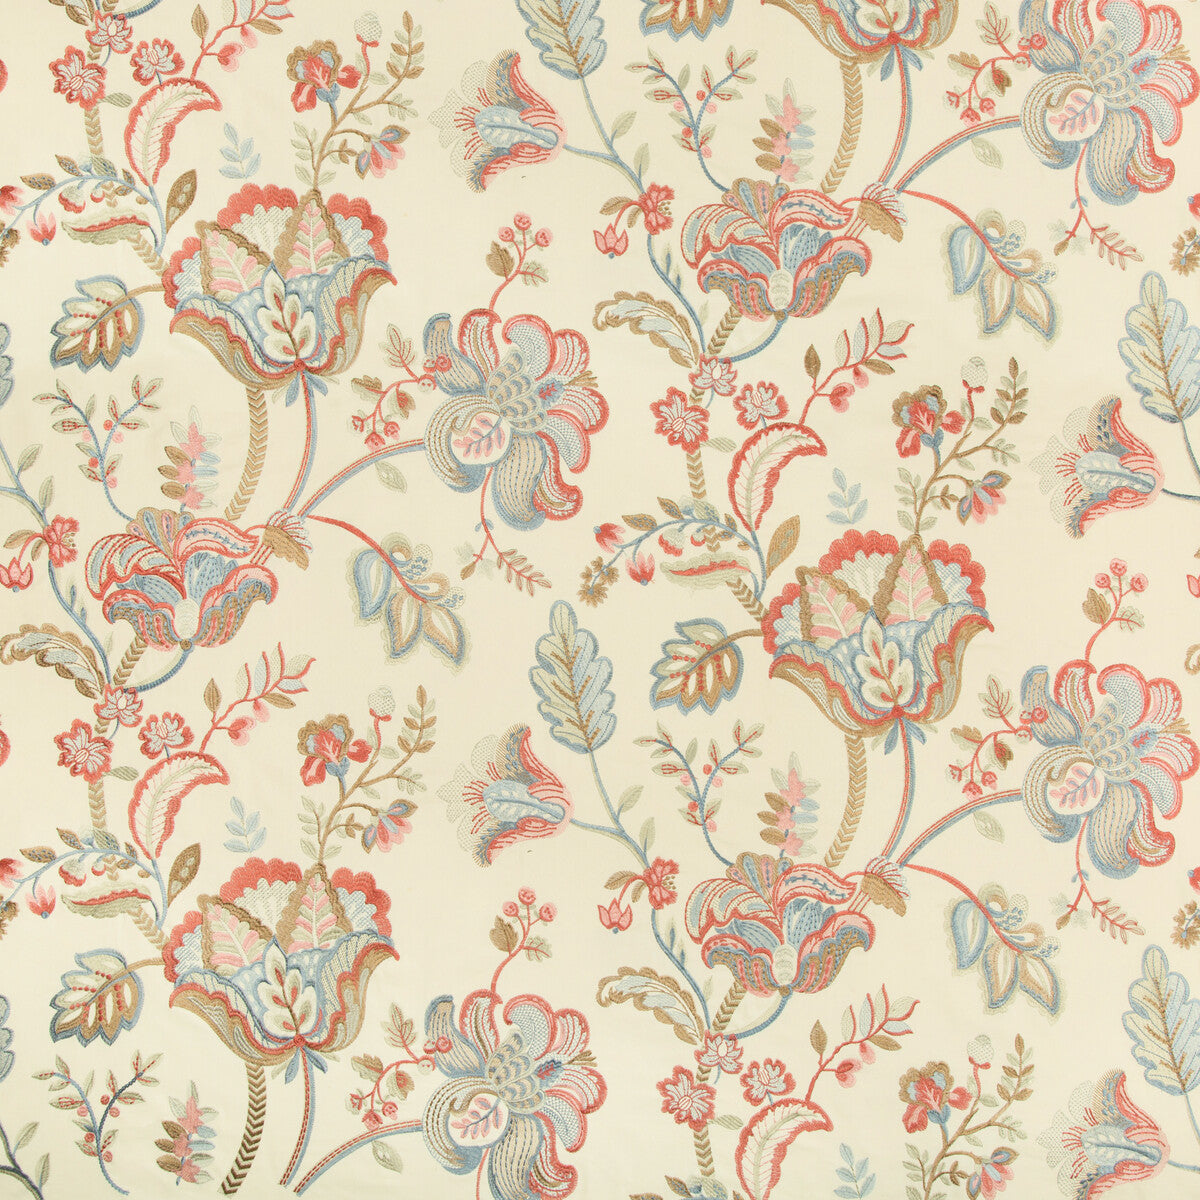 Bradford Emb fabric in petal/capri color - pattern 2017174.57.0 - by Lee Jofa in the Westport collection